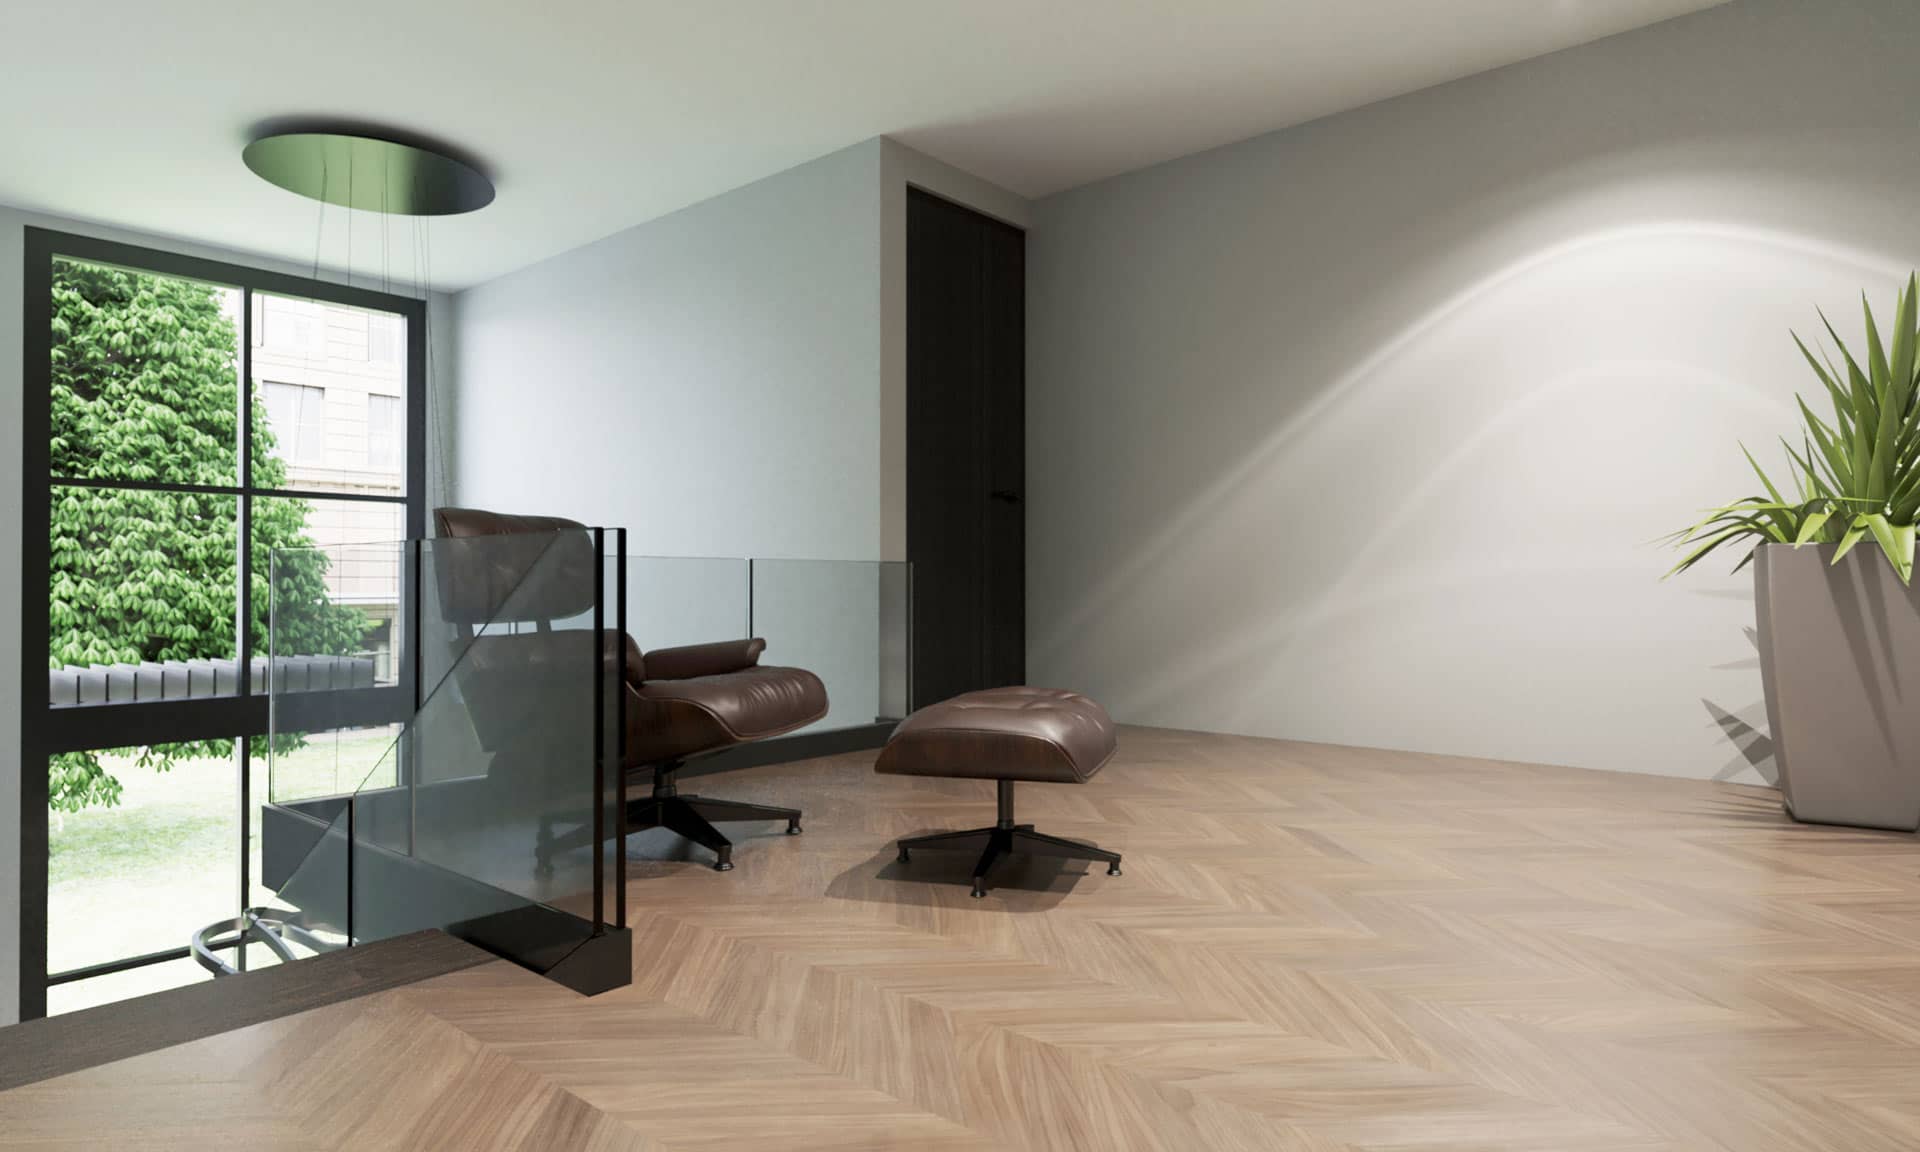 Living Room Harmony: Where comfort meets aesthetics in perfect balance.